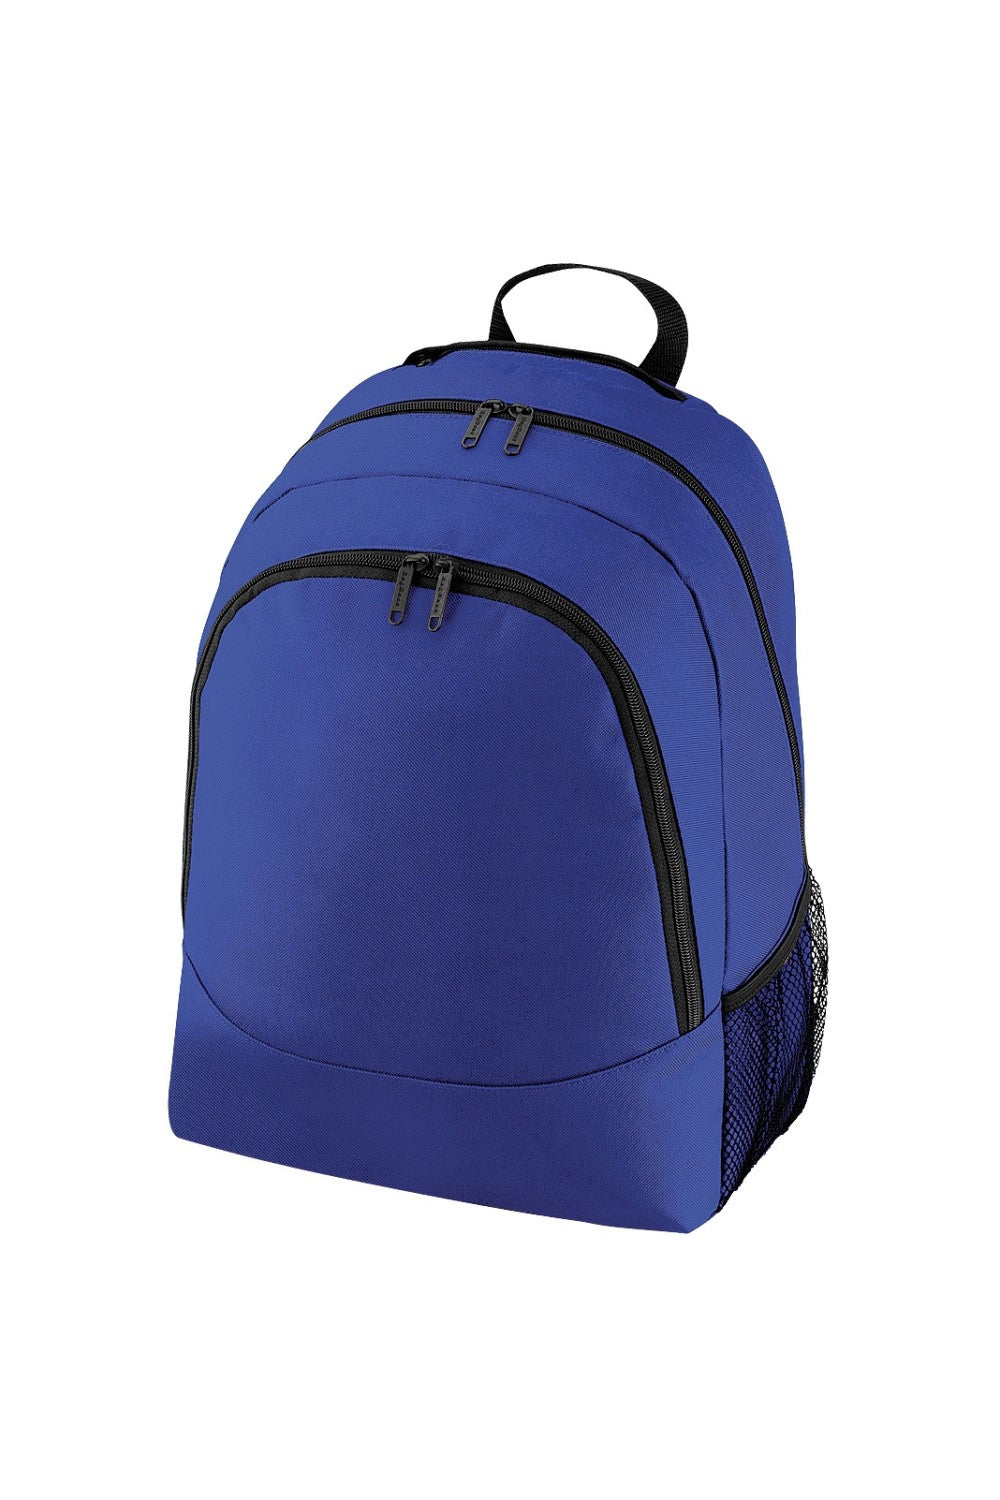 Bagbase Universal Multipurpose Backpack / Rucksack / Bag (18 Litres) (Pack of 2) (Bright Royal) (One Size)